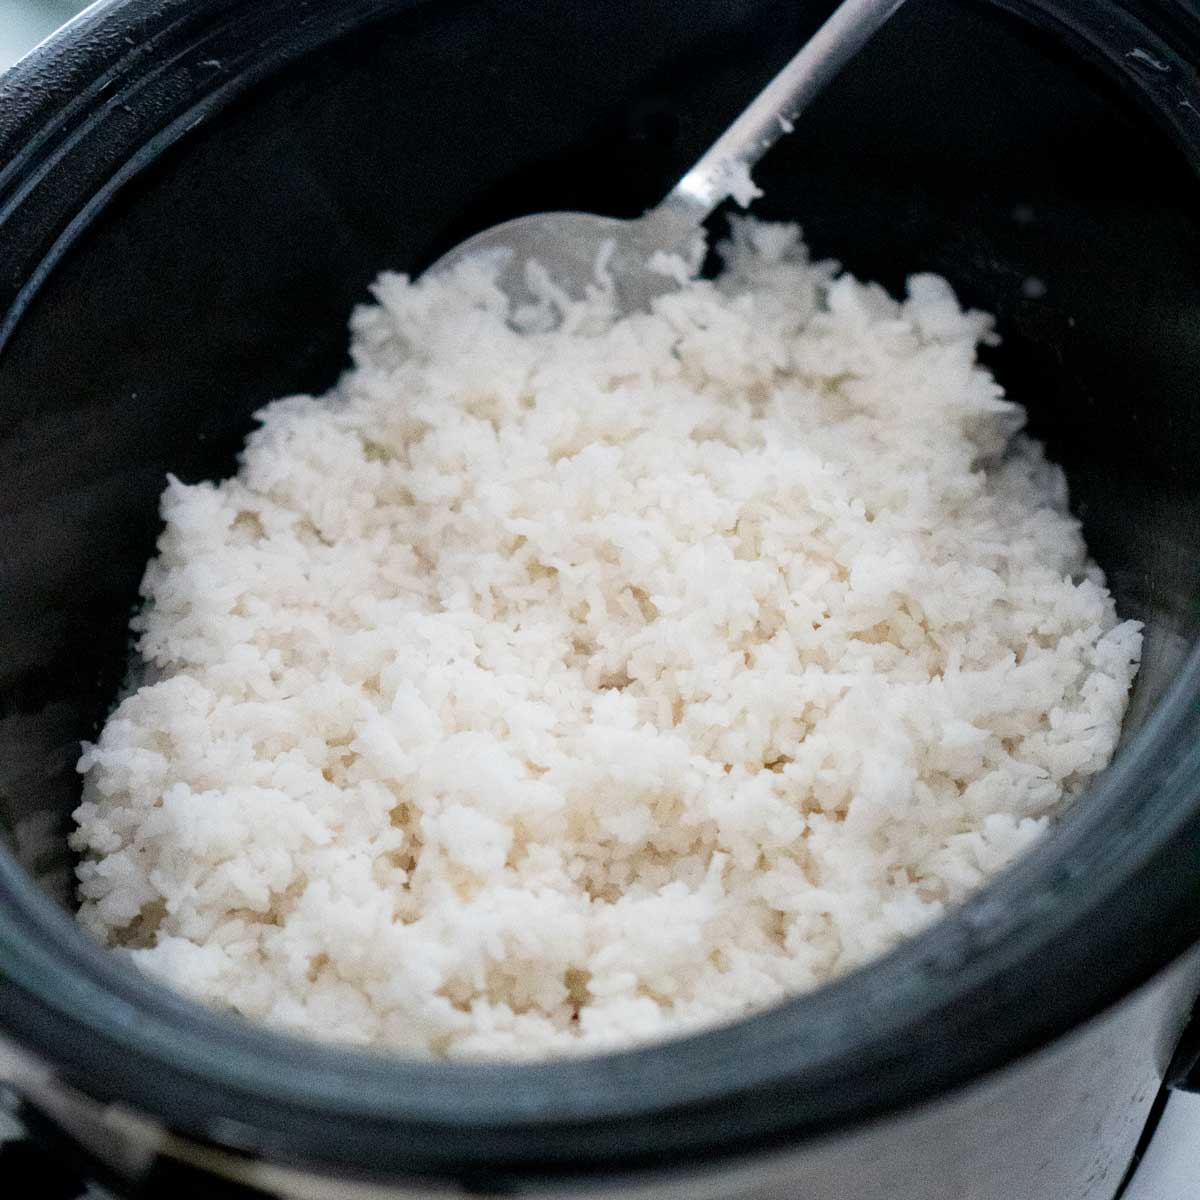 https://thehappierhomemaker.com/wp-content/uploads/2022/12/slow-cooker-rice-featured.jpg